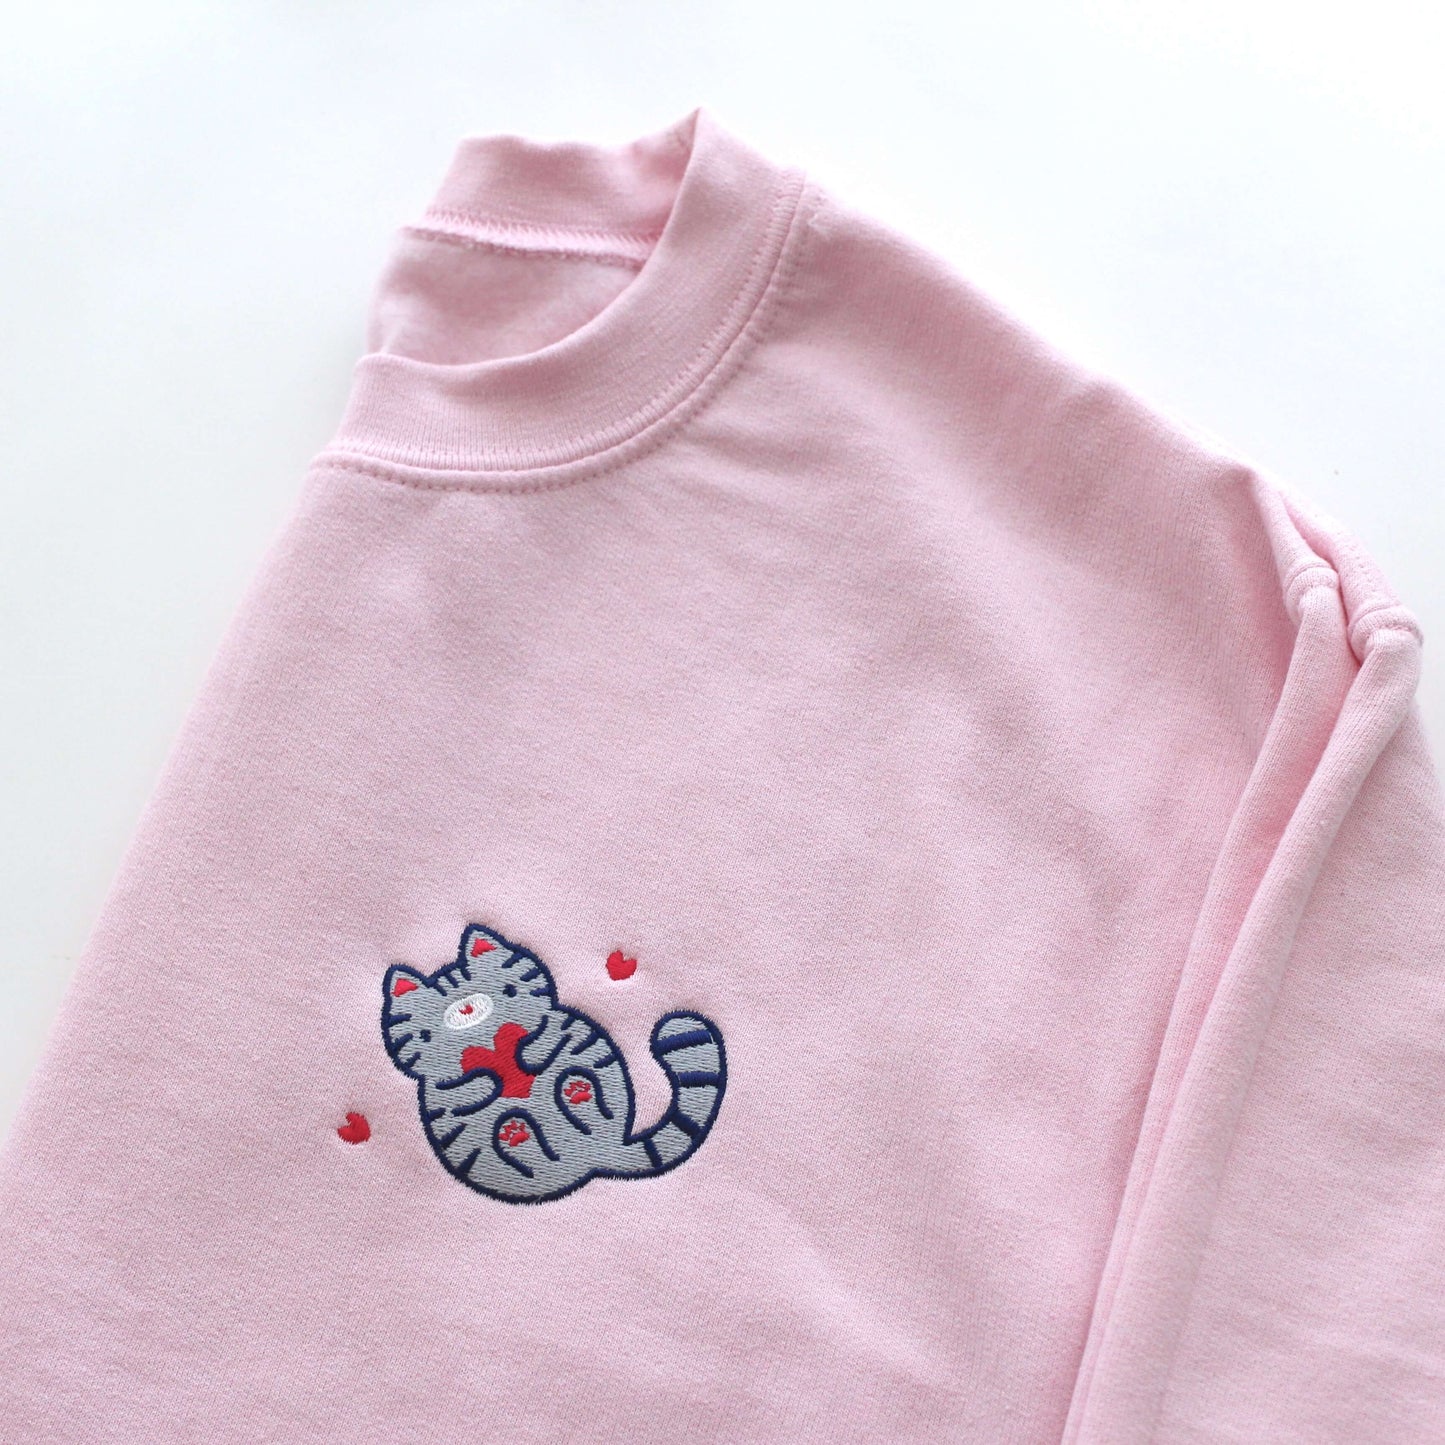 Embroidered Grey Tabby Cat Sweatshirt